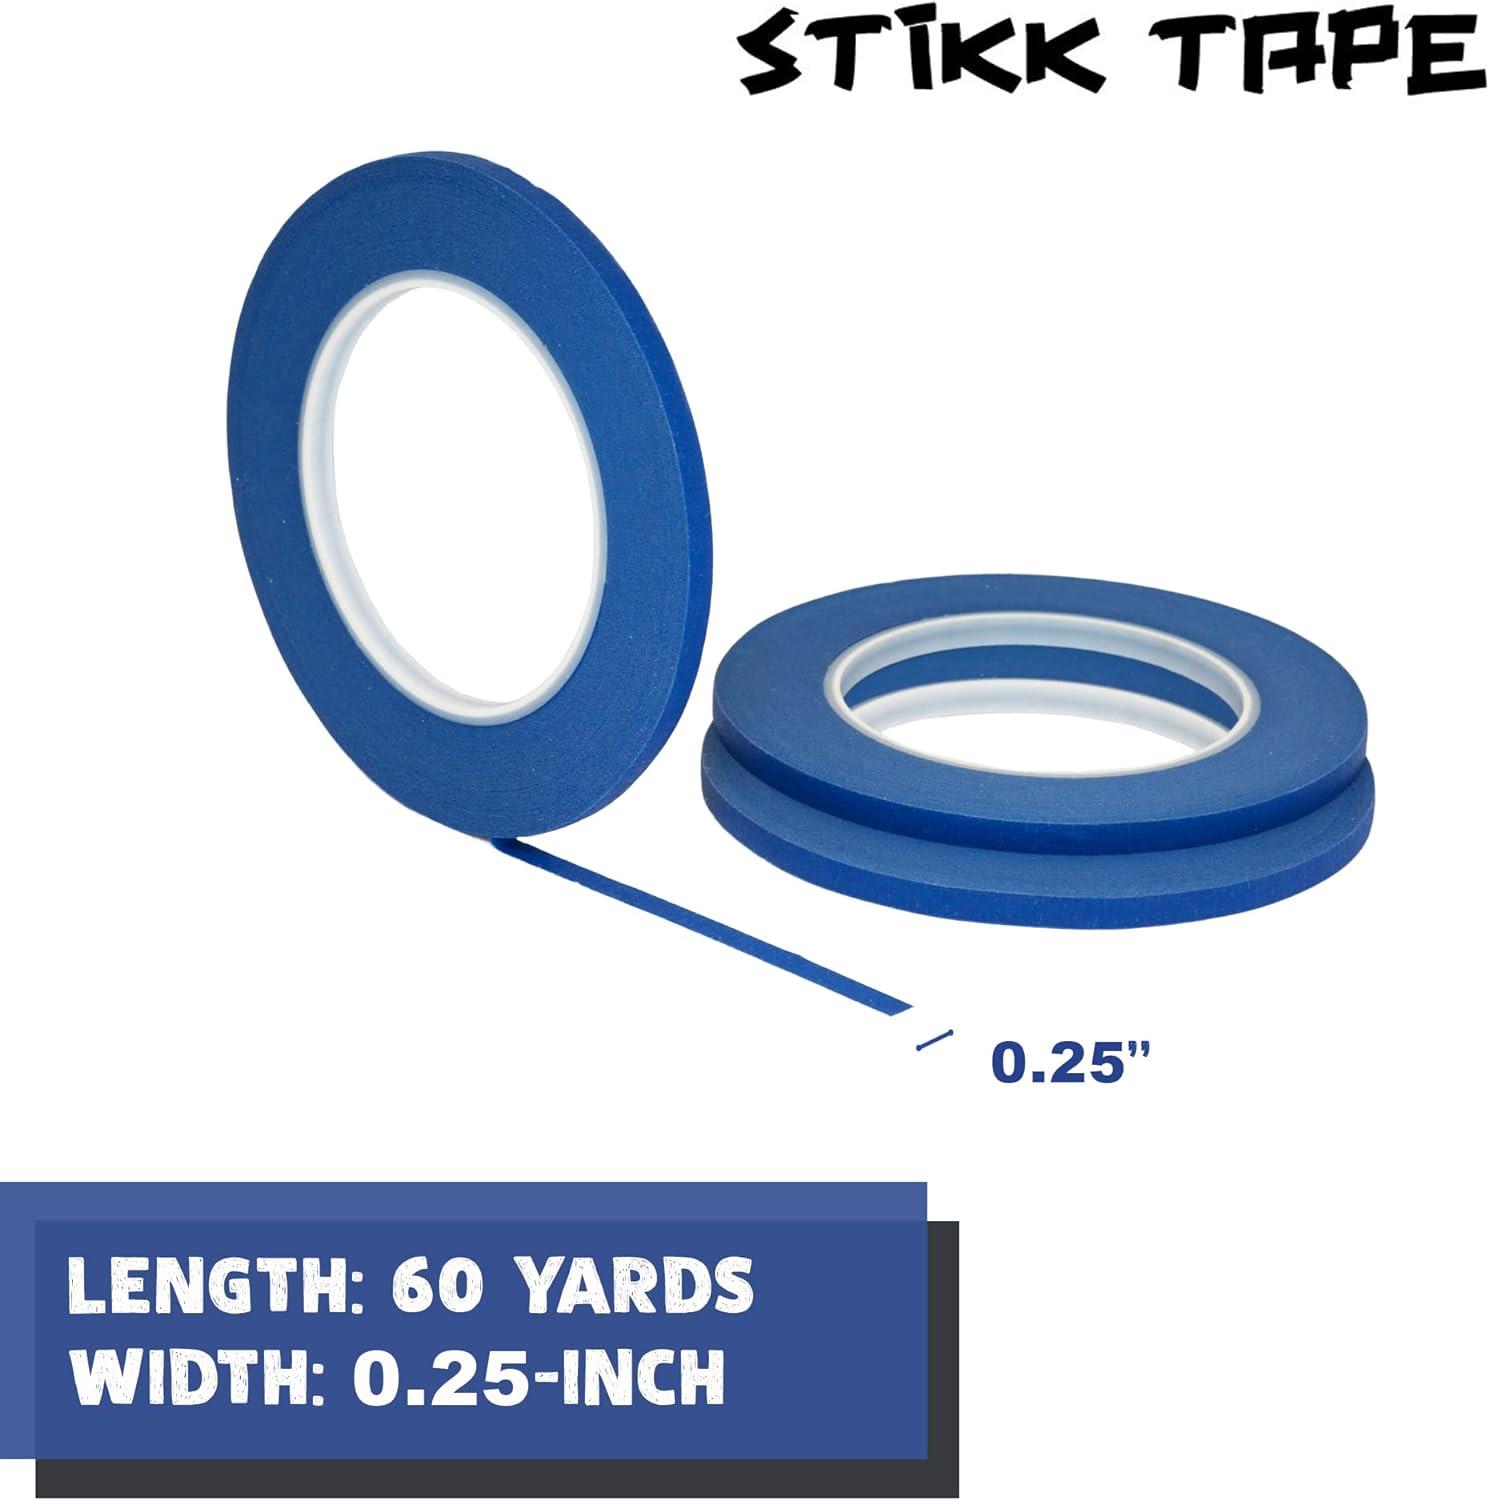 TAPE-STIKK-BLACK-.25-3PK STIKK 3 pk 1/4 inch x 60yd Black Painters Tape 14  Day Easy Removal Trim Edge Thin Narrow Finishing Masking Tape (.25 in 6MM)